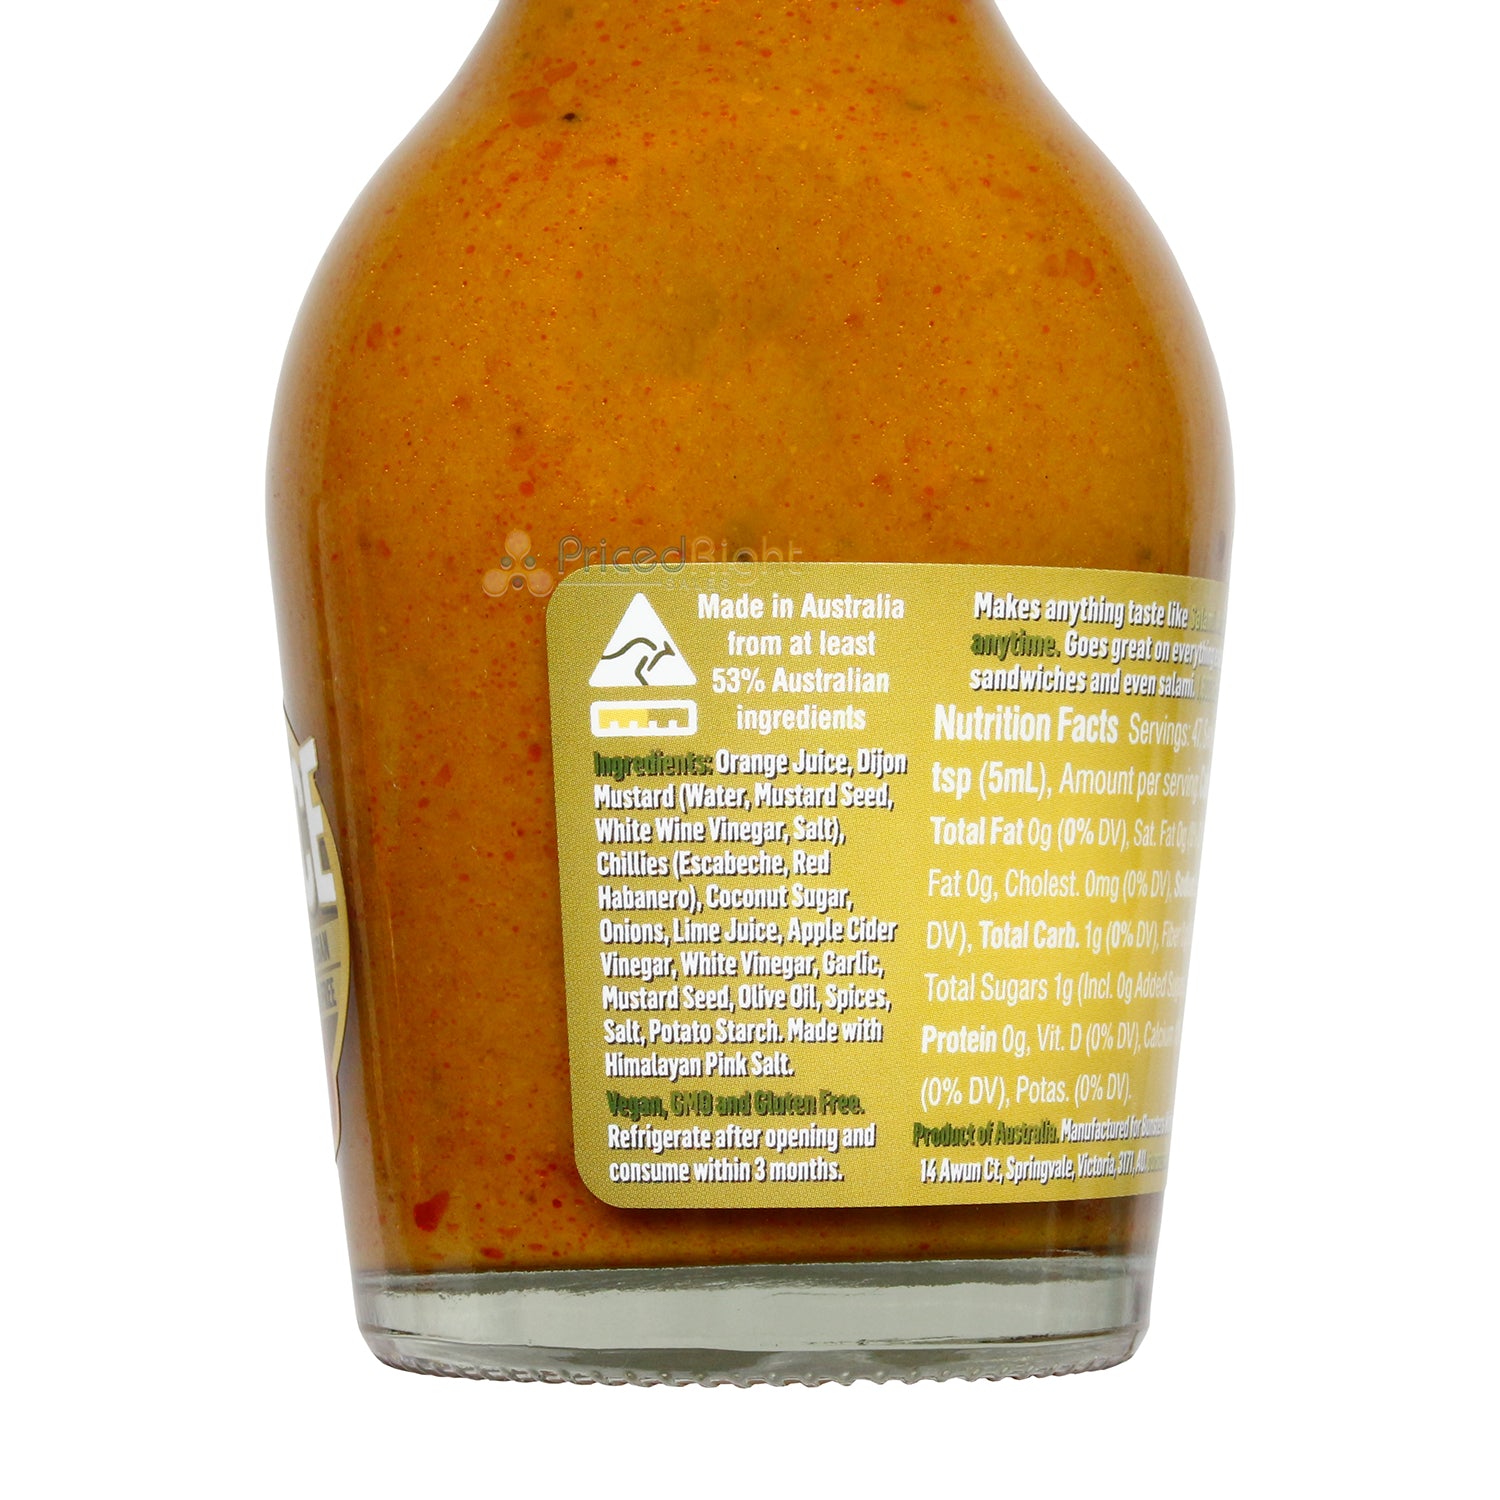 Bunsters Salami Hot Sauce 8/10 Heat All Purpose Vegan Gluten Non Gmo Free 8oz